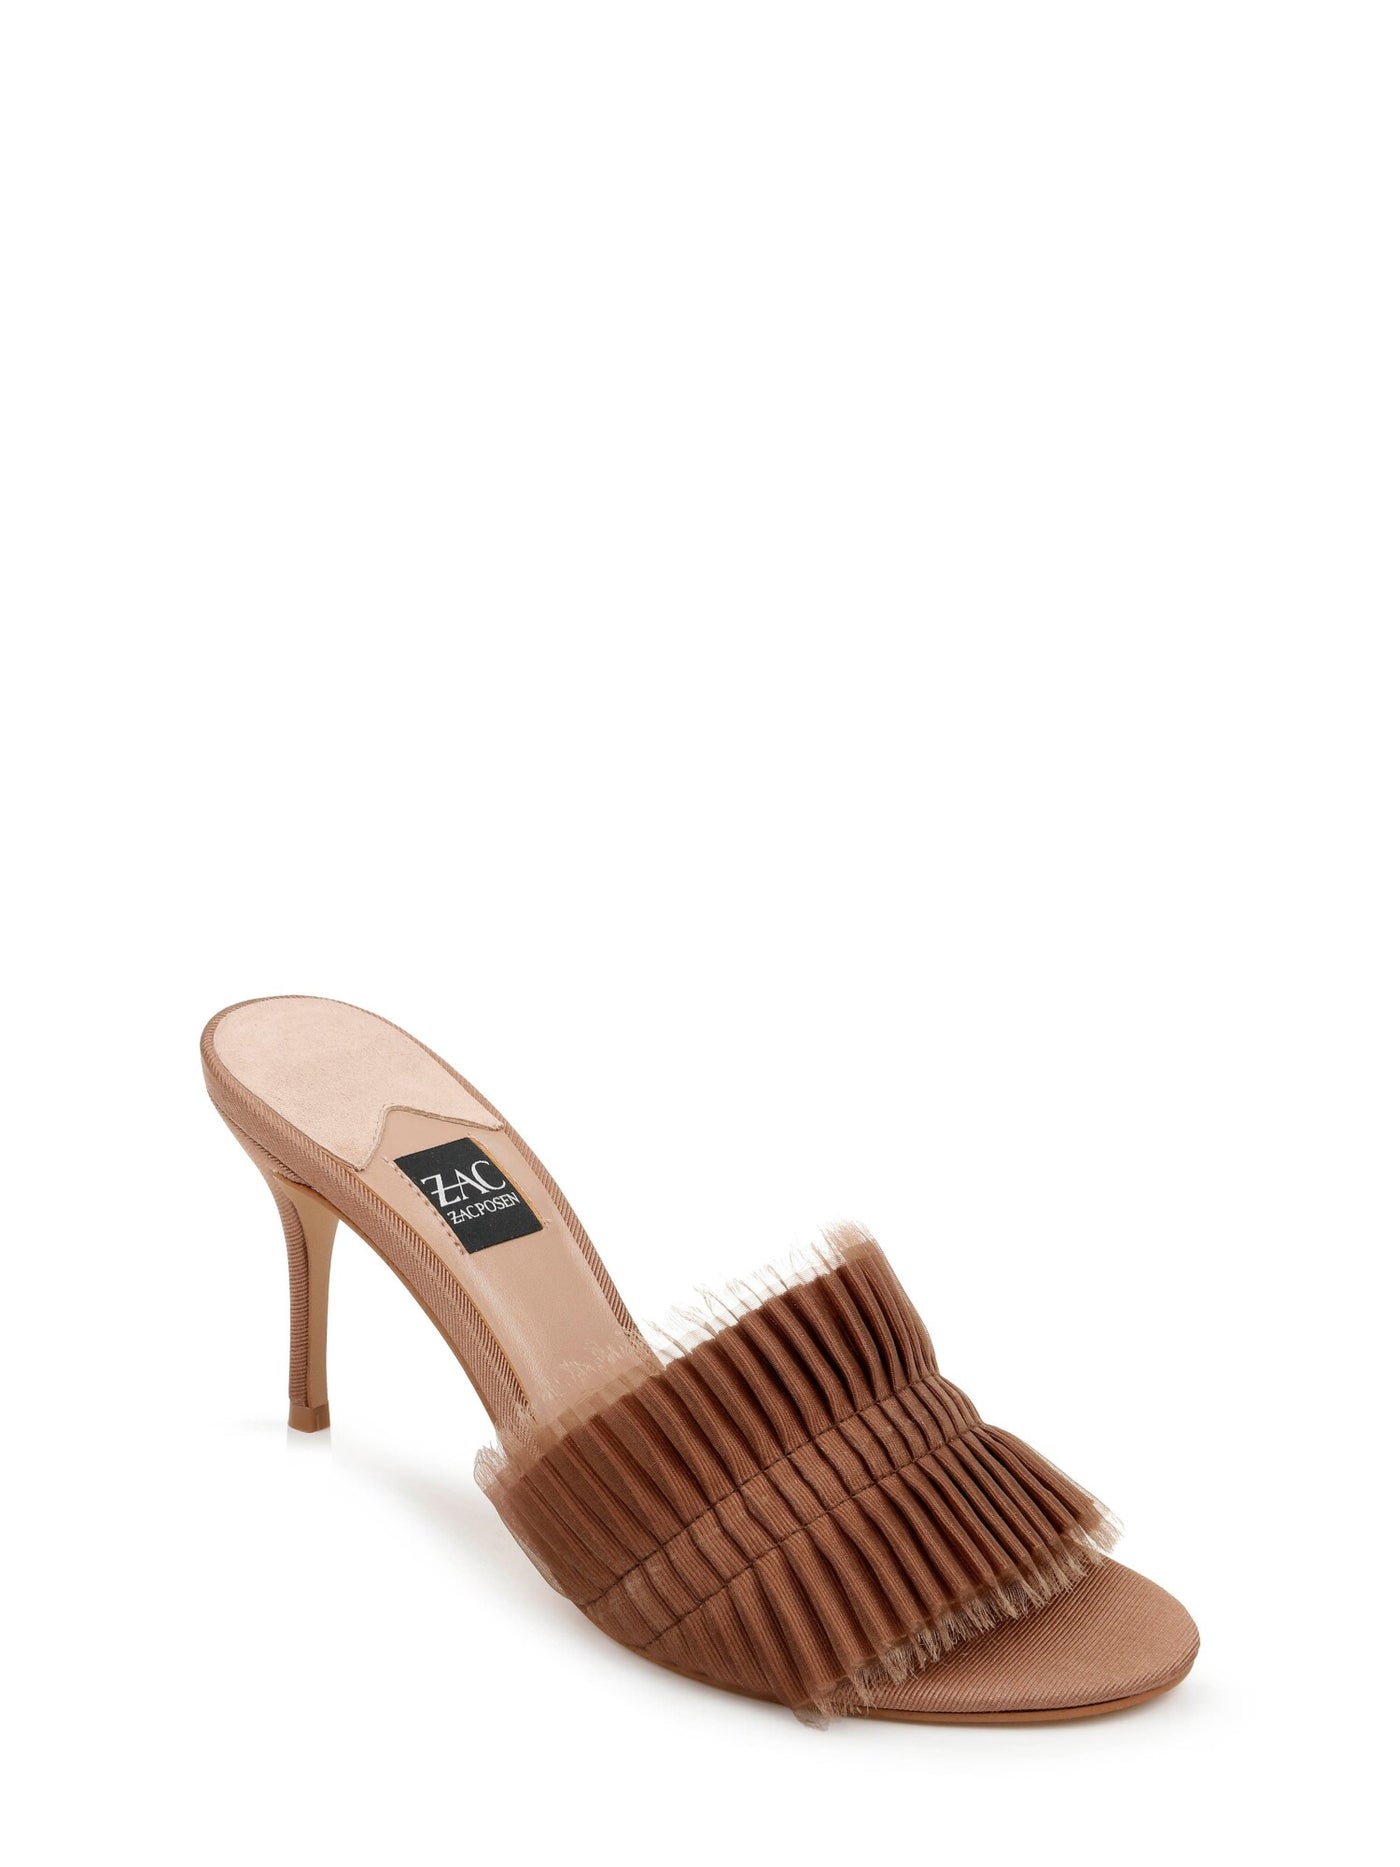 ZAC ZAC POSEN Womens Beige Pleated Padded Venecia Round Toe Stiletto Slip On Dress Sandals Shoes 6.5 M